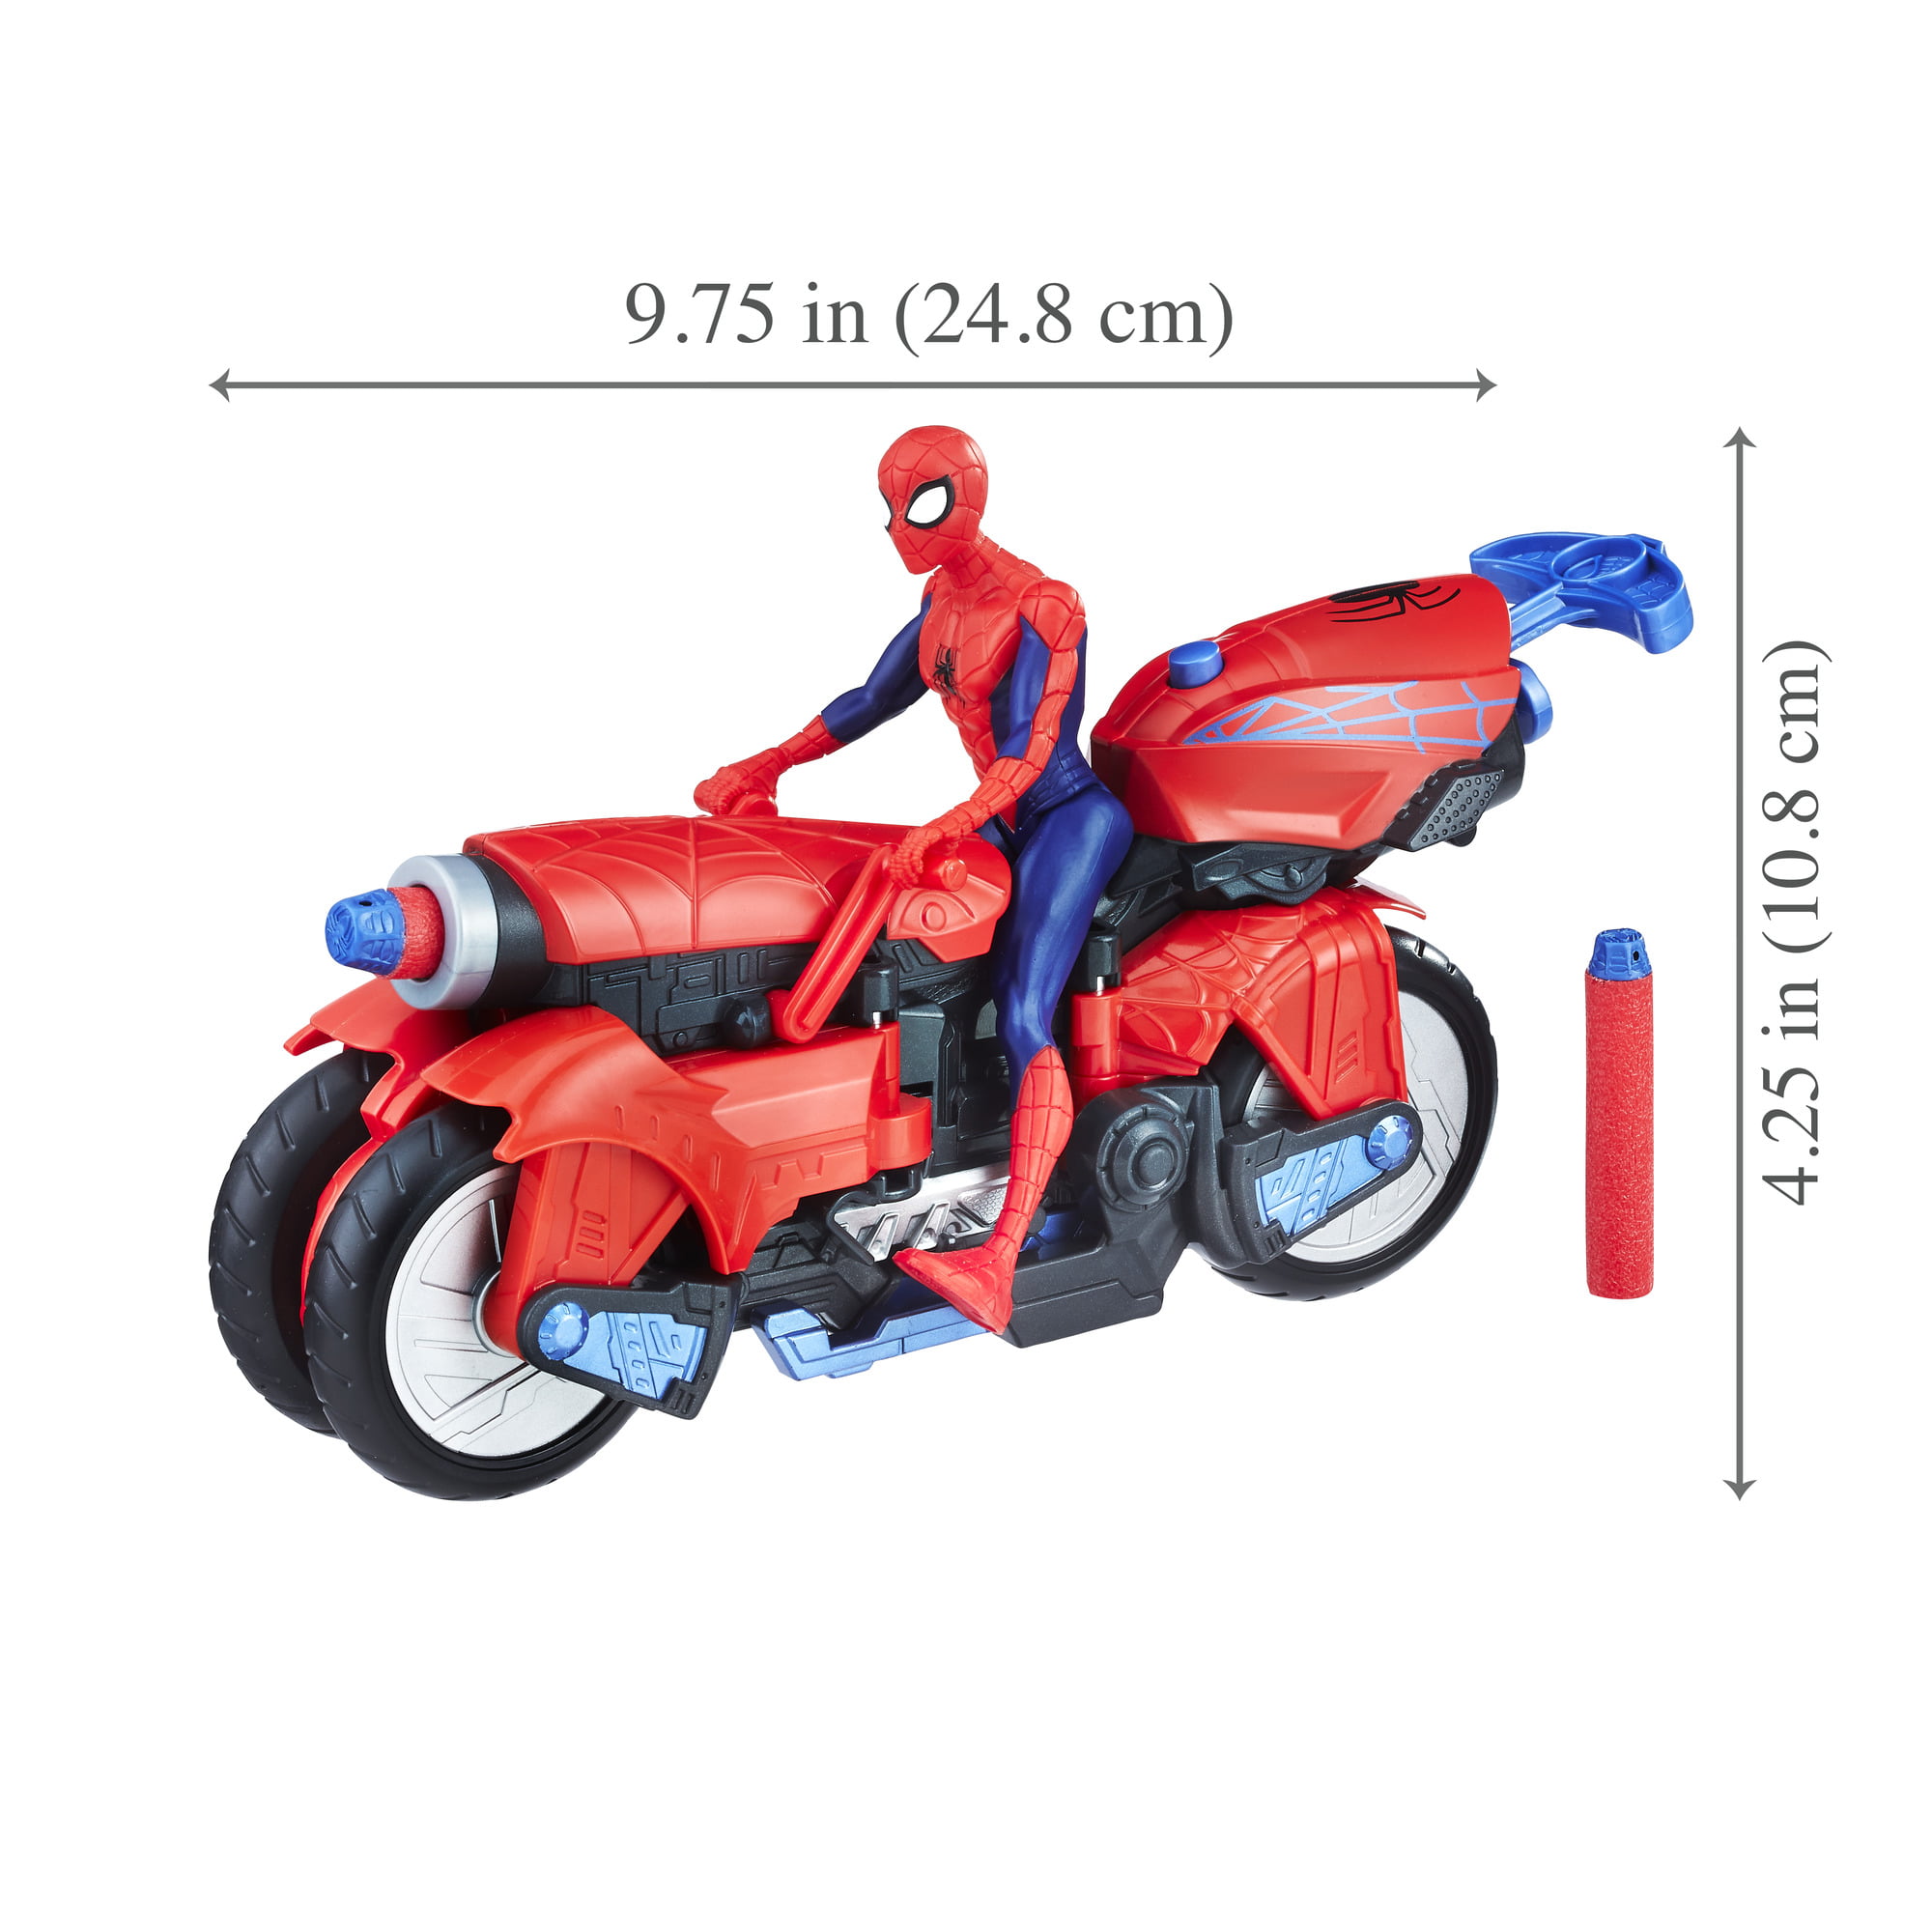 Spiderman - vehicule spider-mobile et figurine 15 cm, figurines